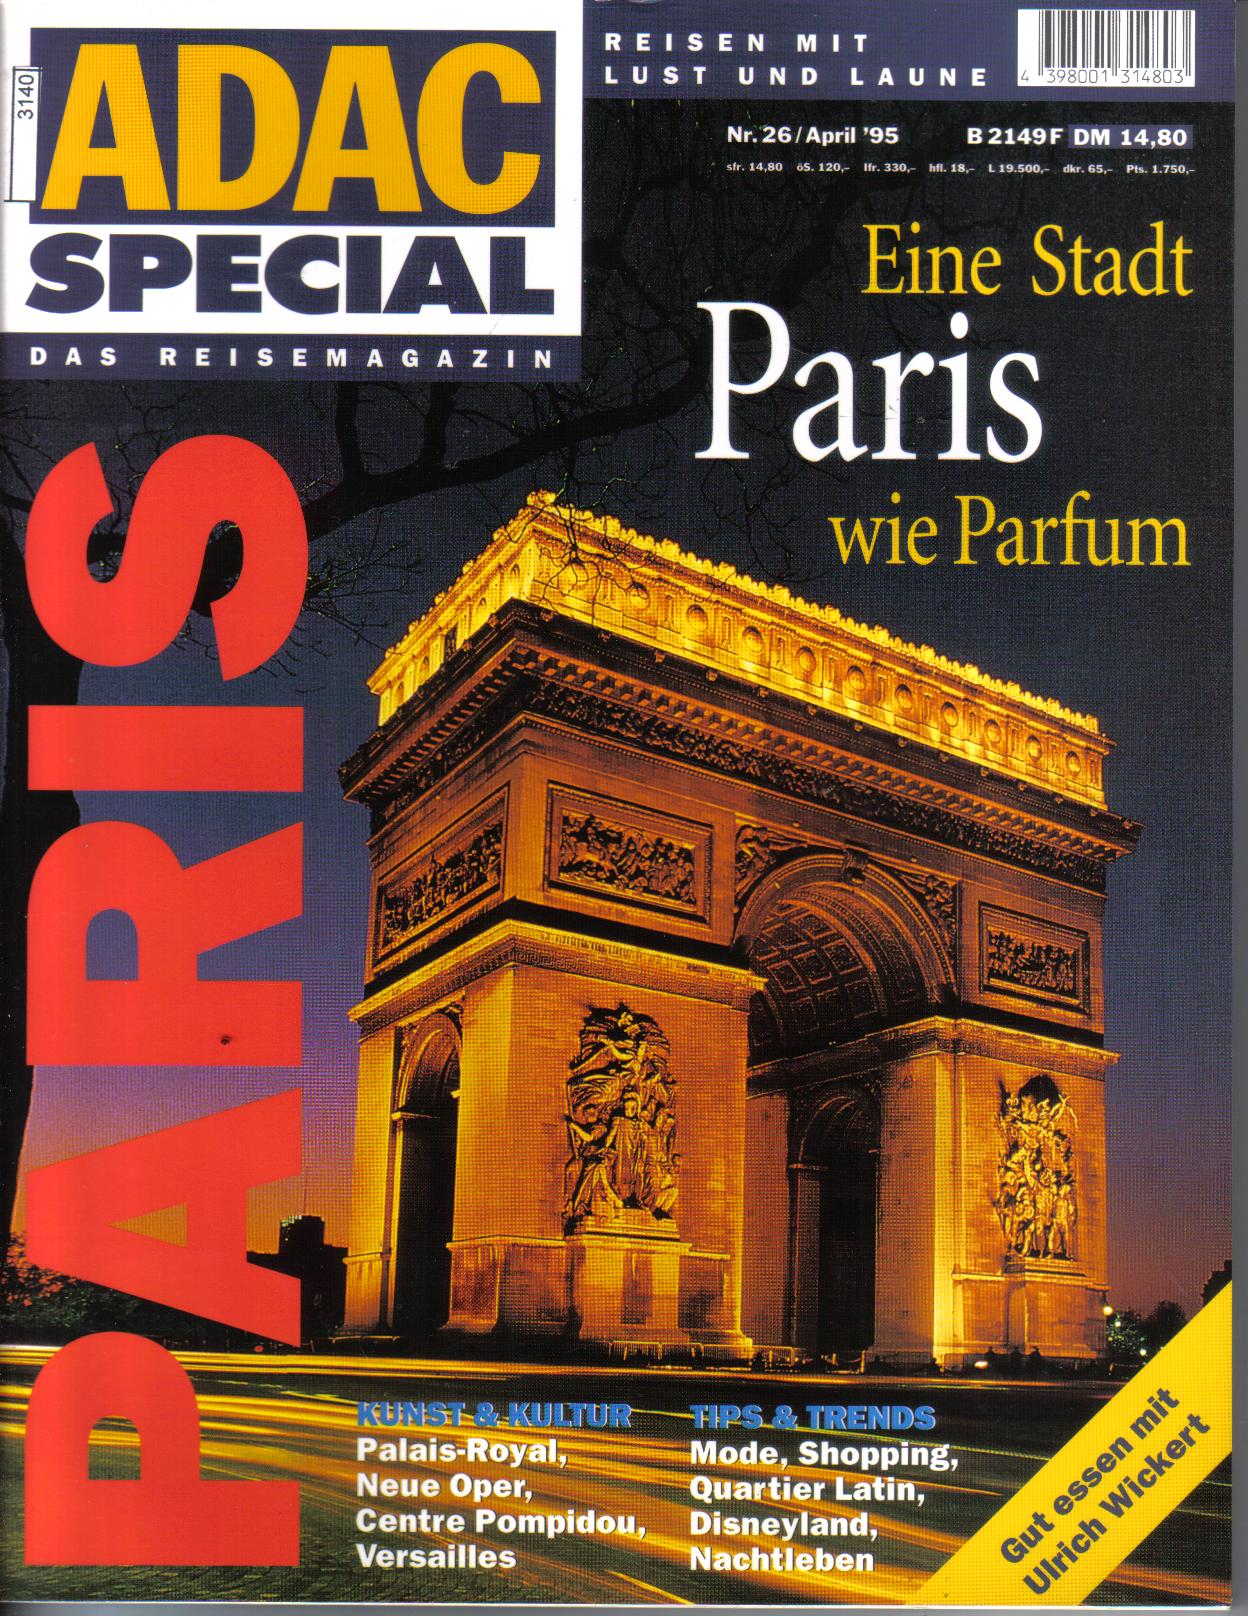 ADAC  Special Das Reisemagazin   Paris